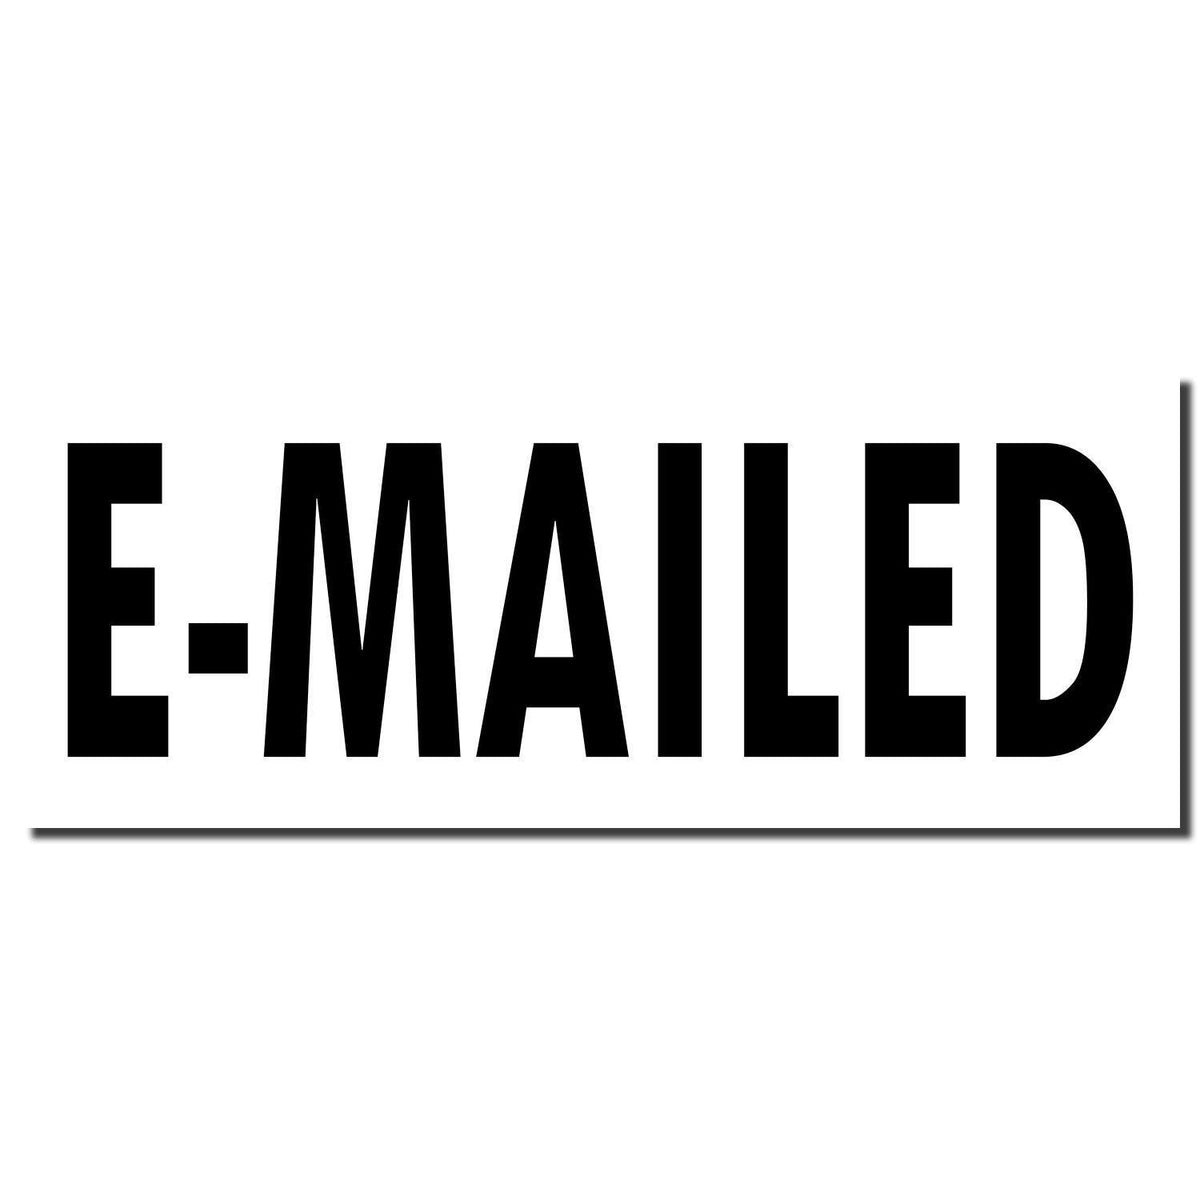 Enlarged Imprint Large E Mailed Rubber Stamp Sample